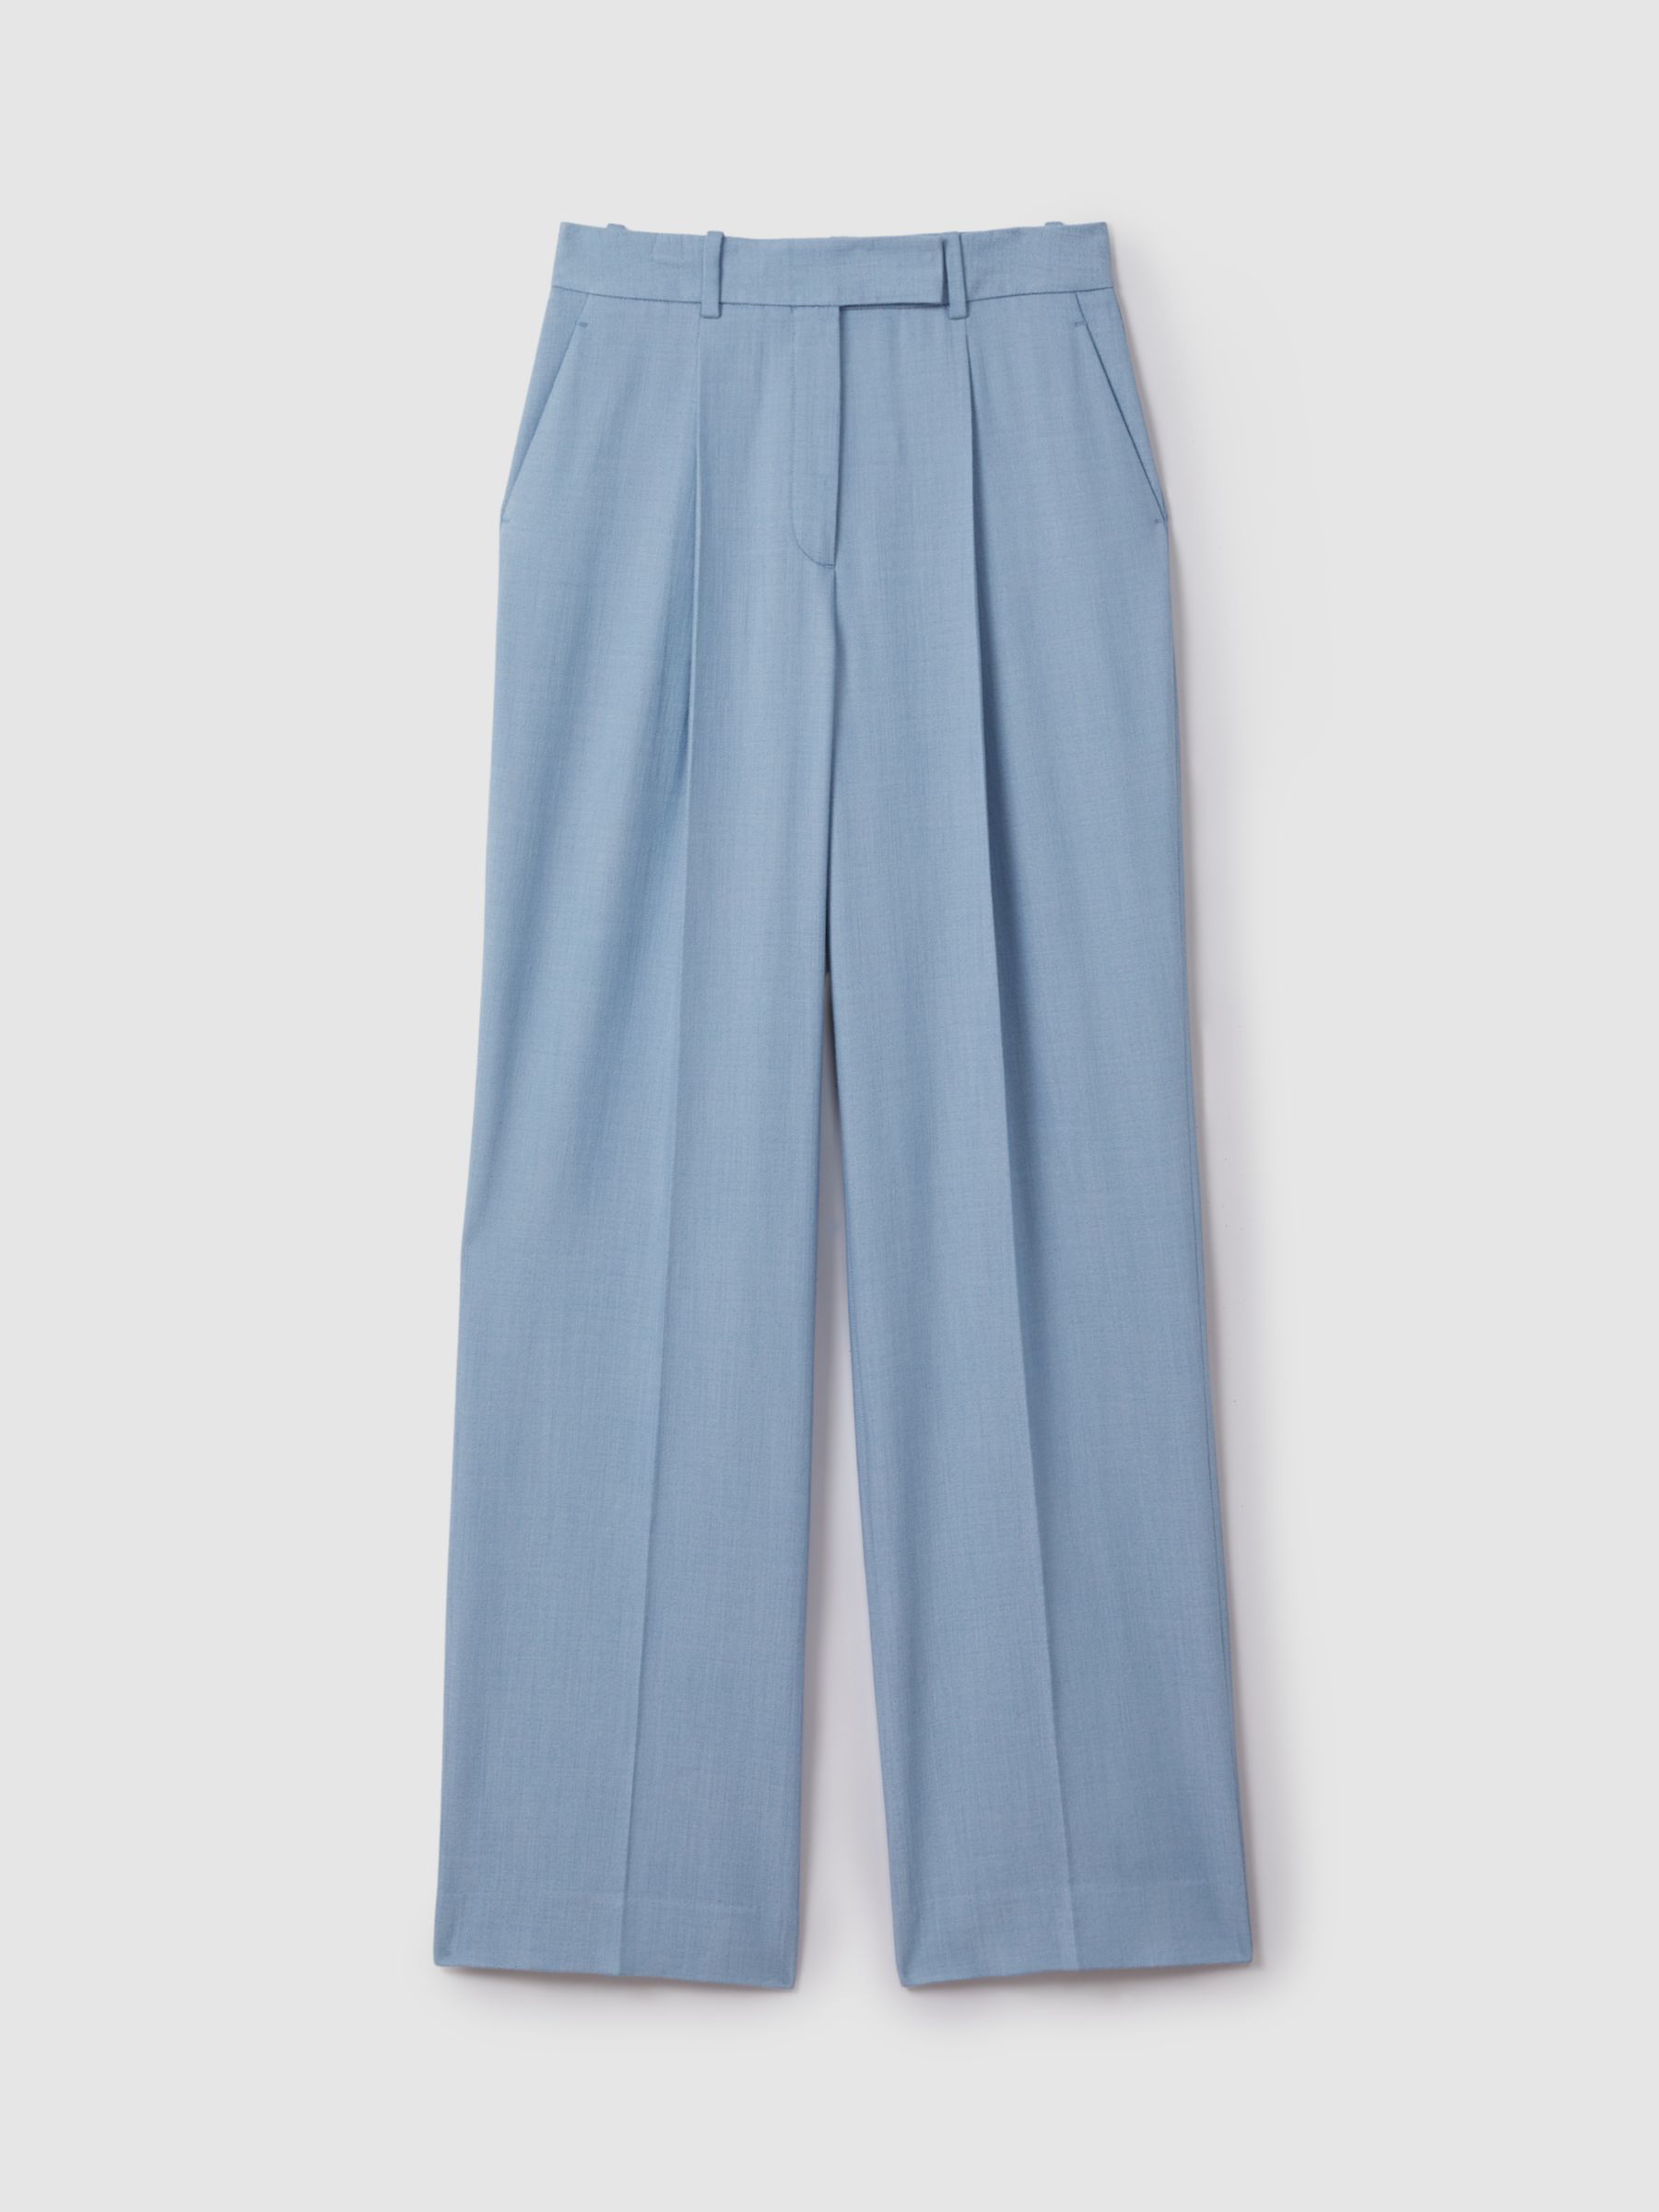 Reiss Petite June Wide Leg Tailored Trousers, Blue, 6